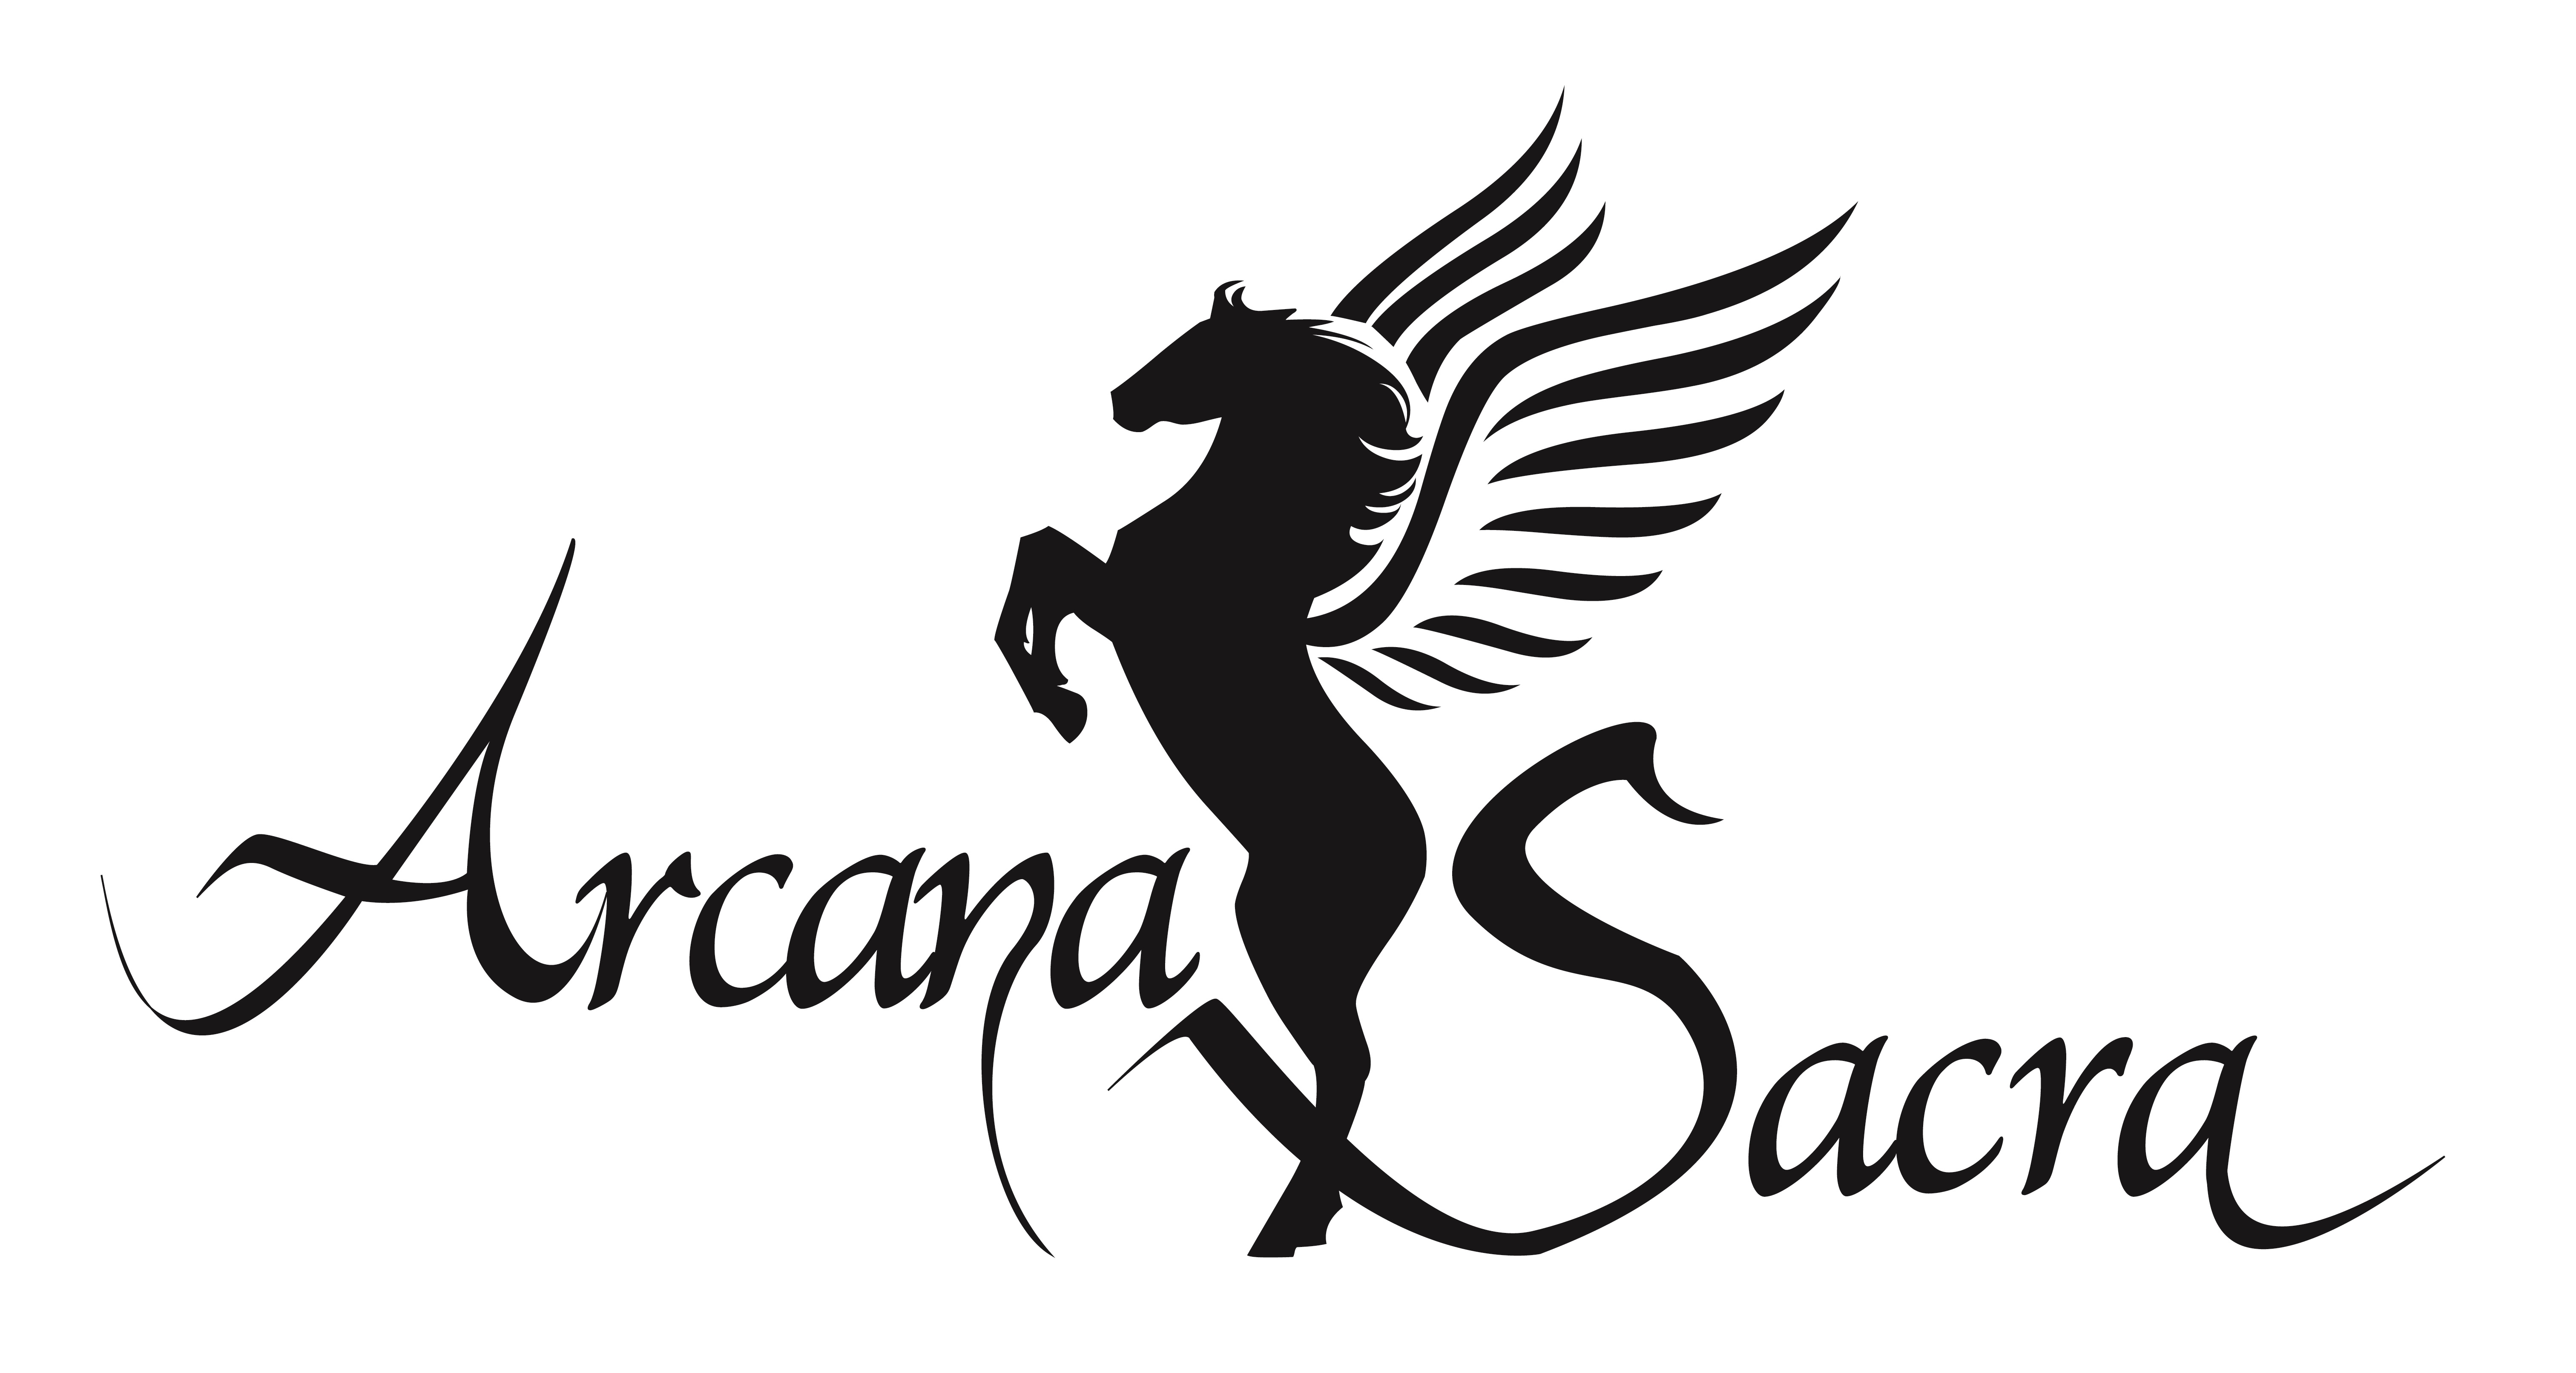 logo Arcana sacra